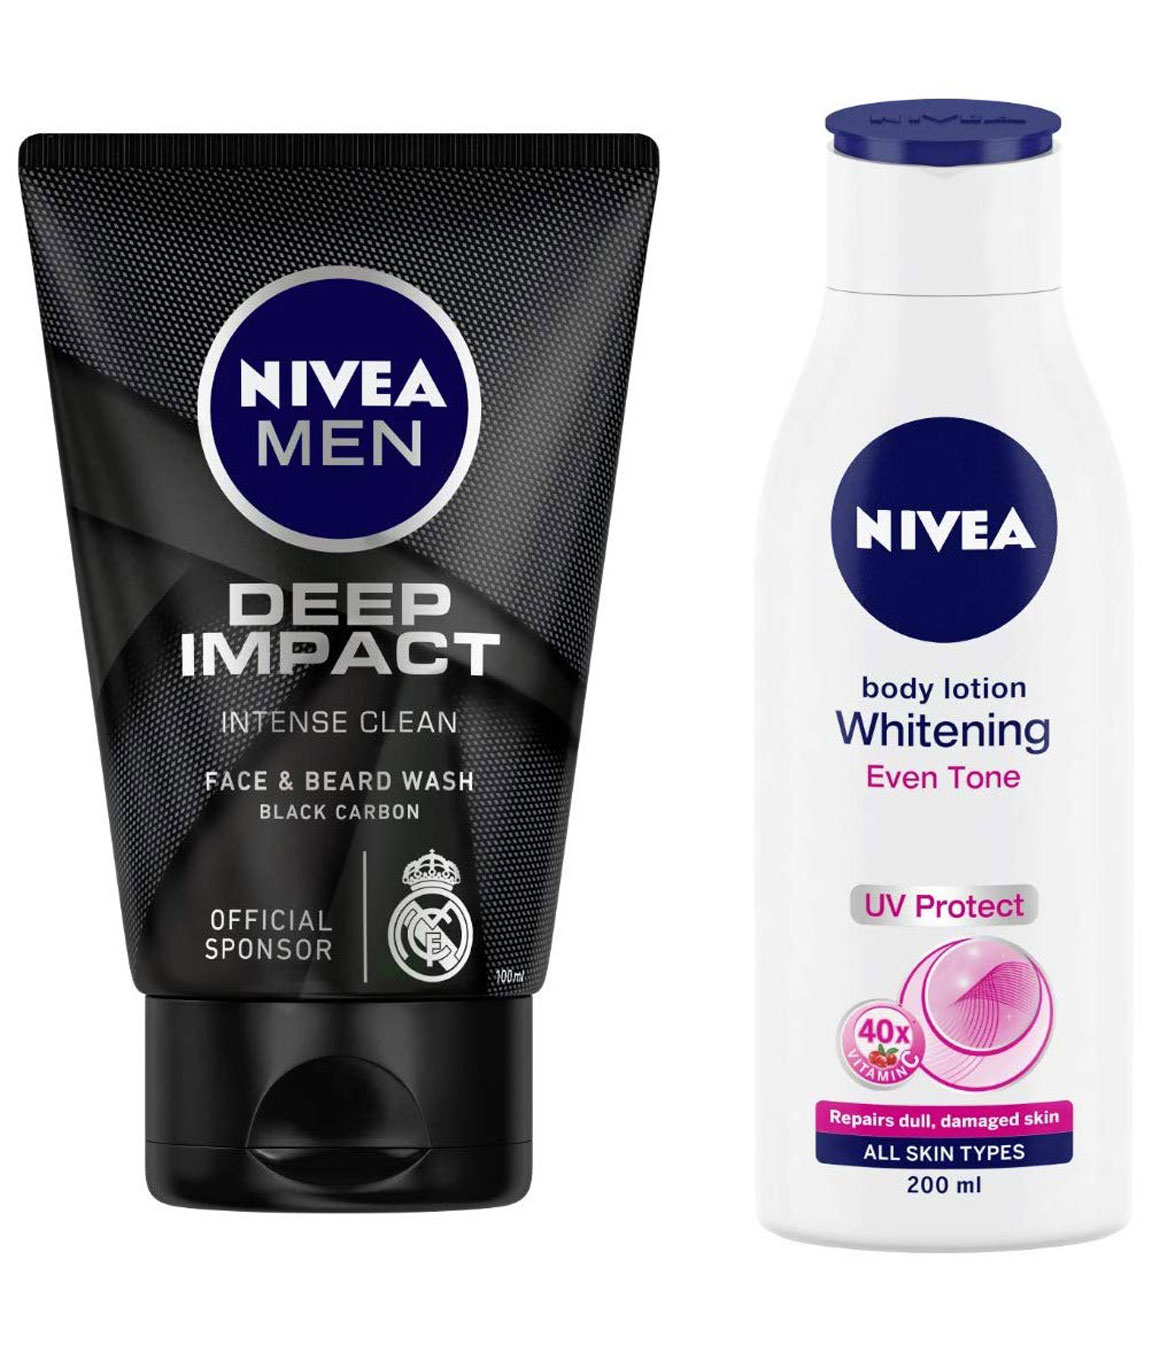 NIVEA MEN Face & Beard Wash, Deep Impact Intense Clean, 100ml & Body Lotion, Whitening Even Tone UV Protect, 200ml Combo